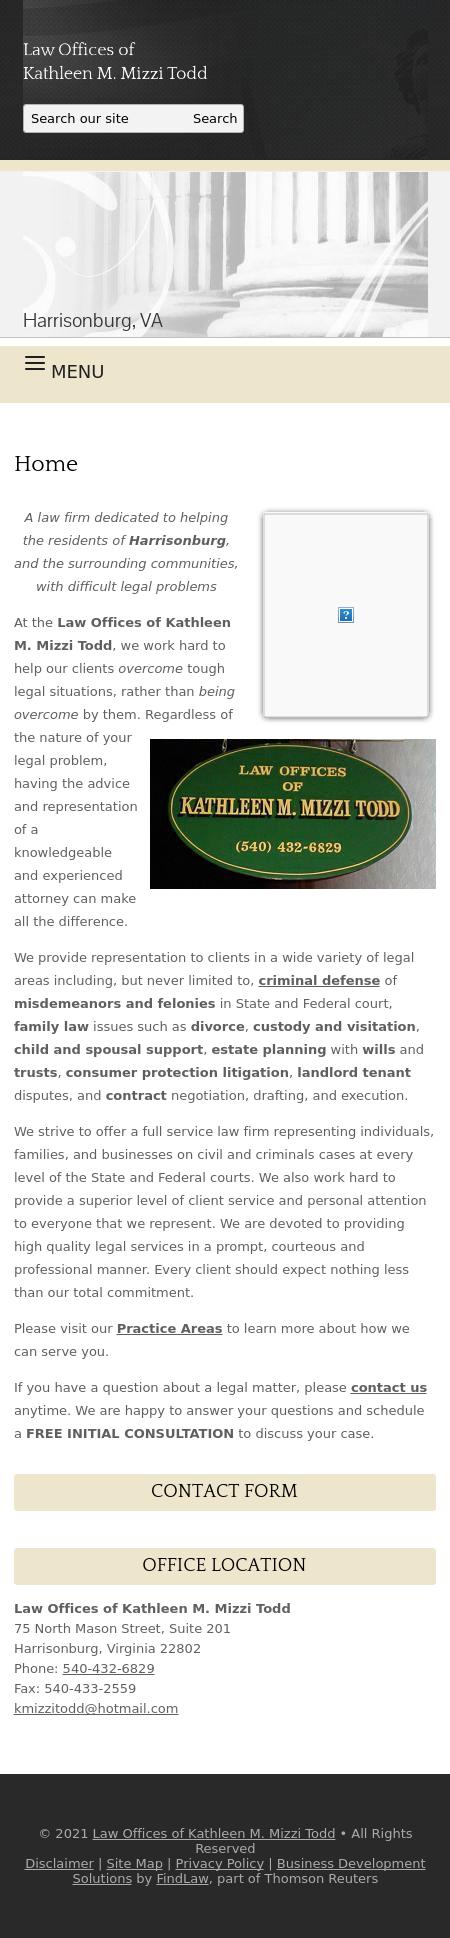 Law Offices of Kathleen M. Mizzi Todd - Harrisonburg VA Lawyers